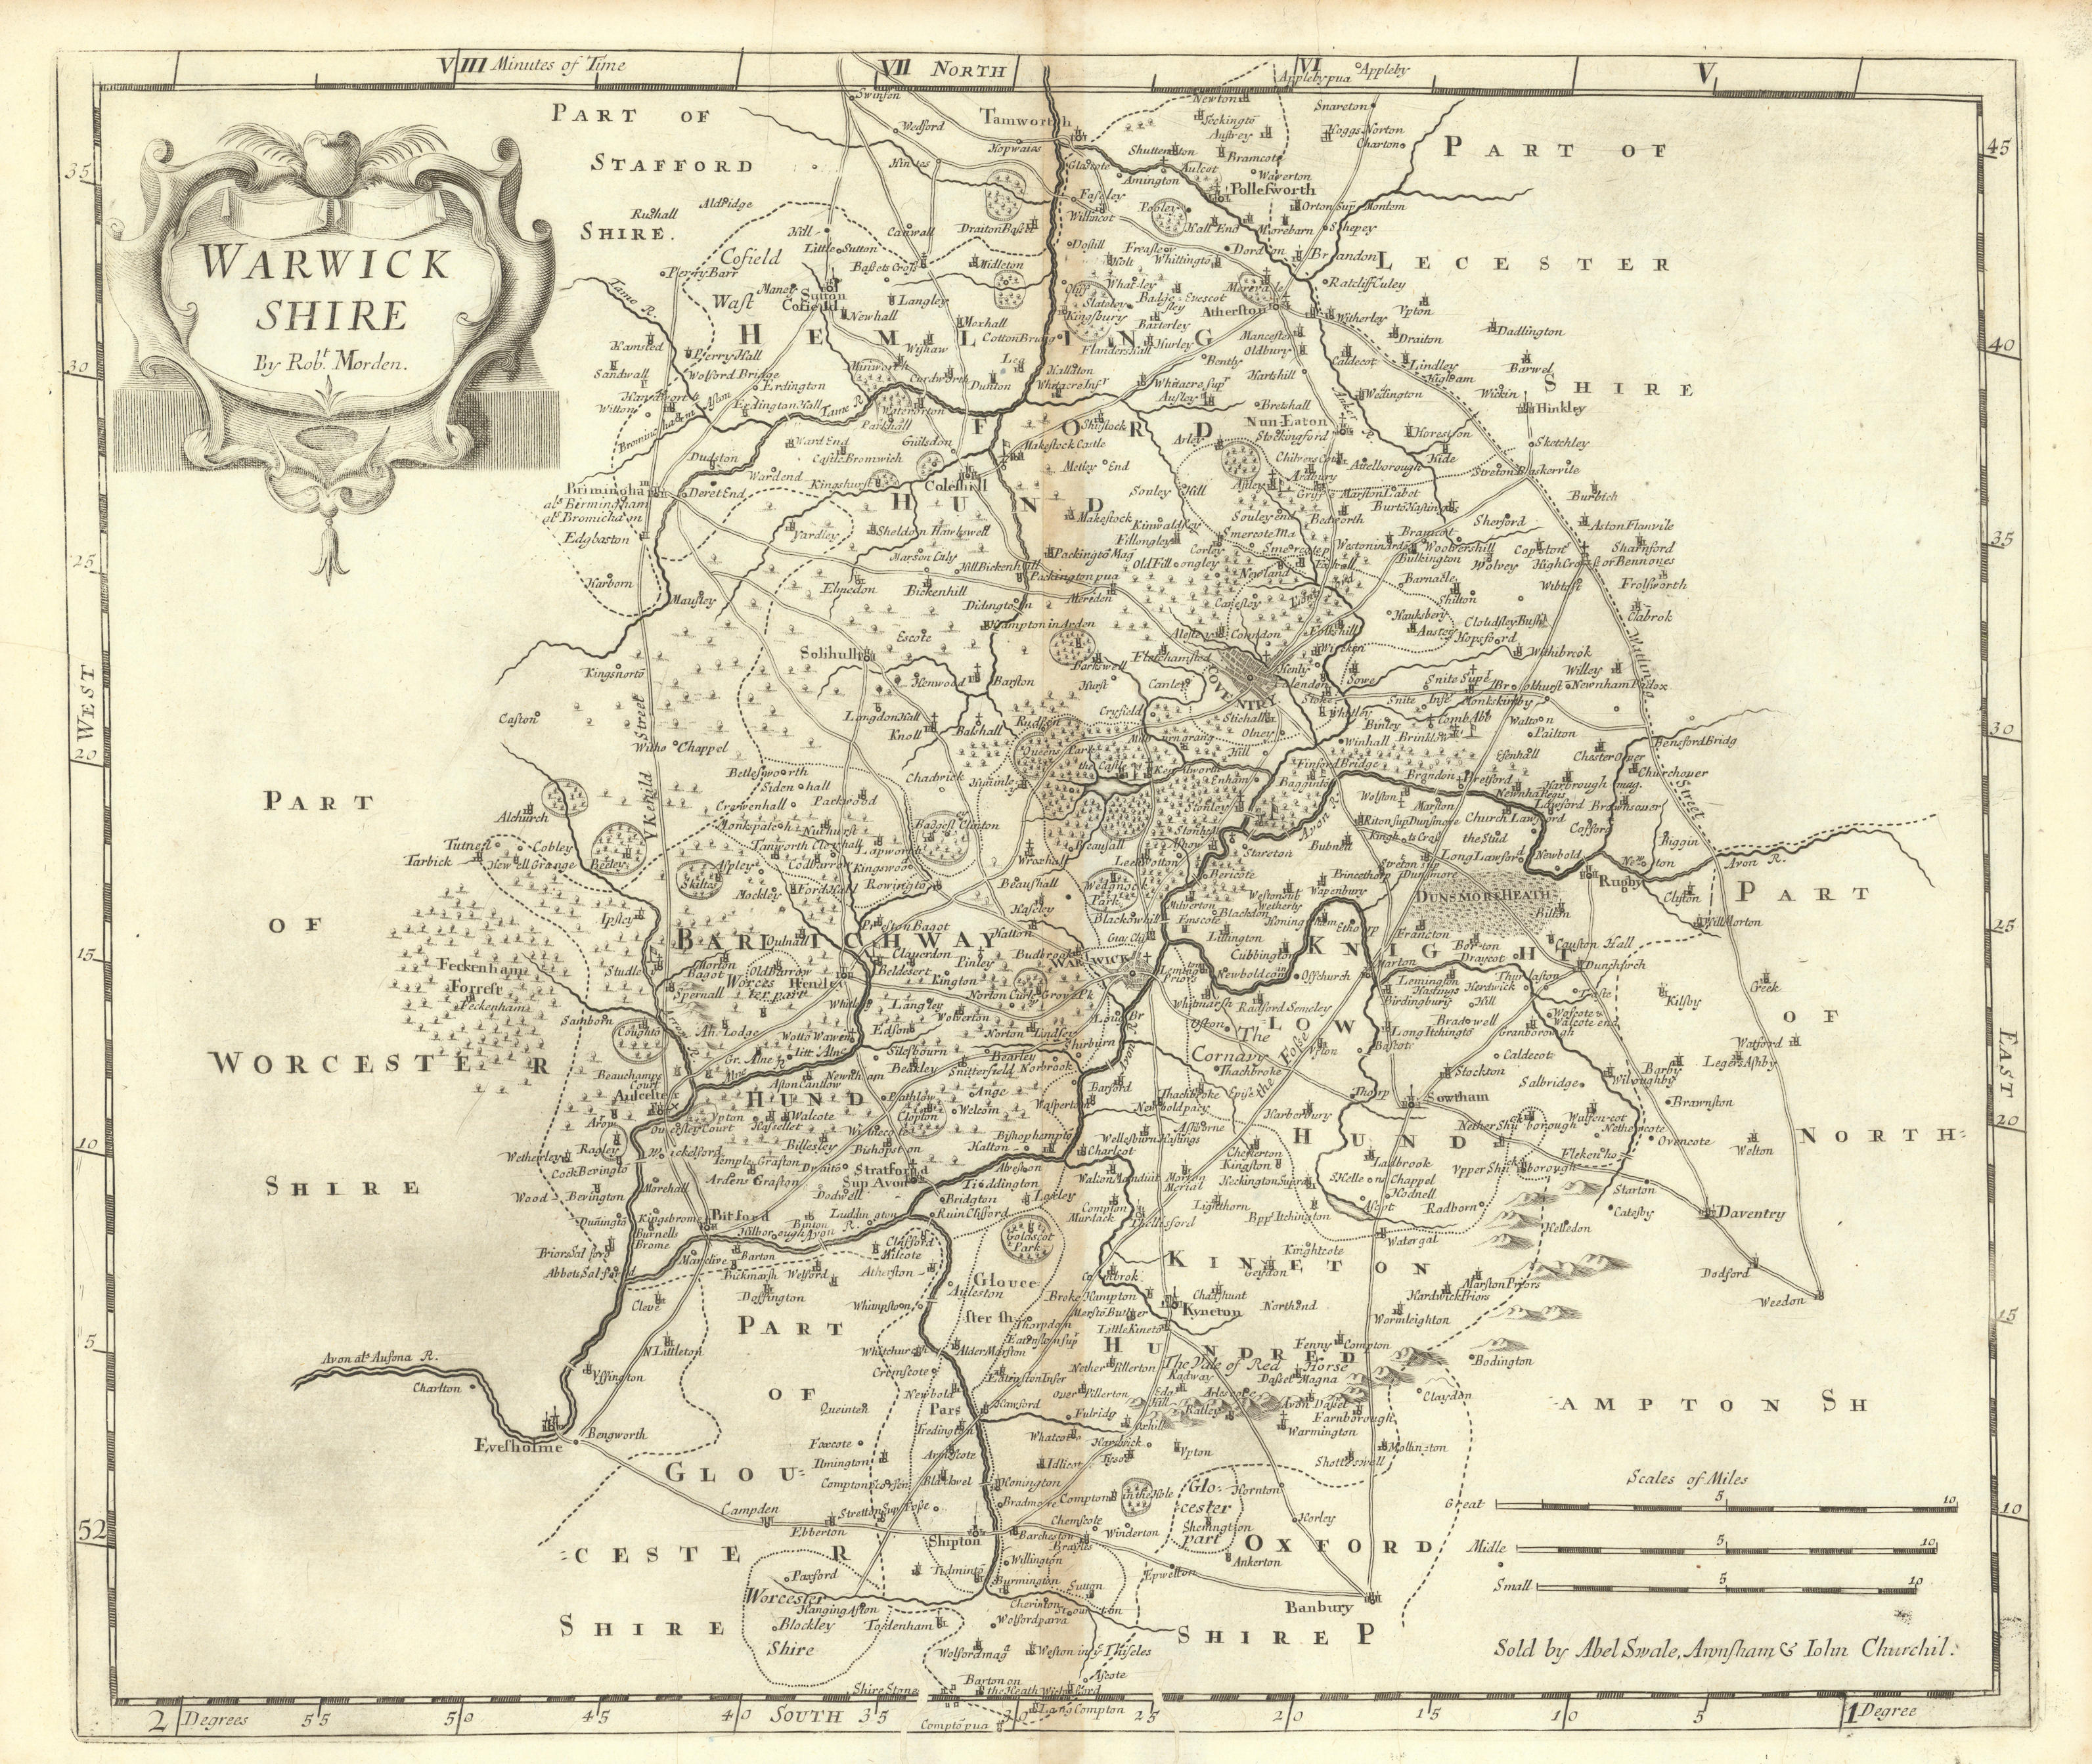 Associate Product Warwickshire. 'WARWICK SHIRE' by ROBERT MORDEN from Camden's Britannia 1695 map